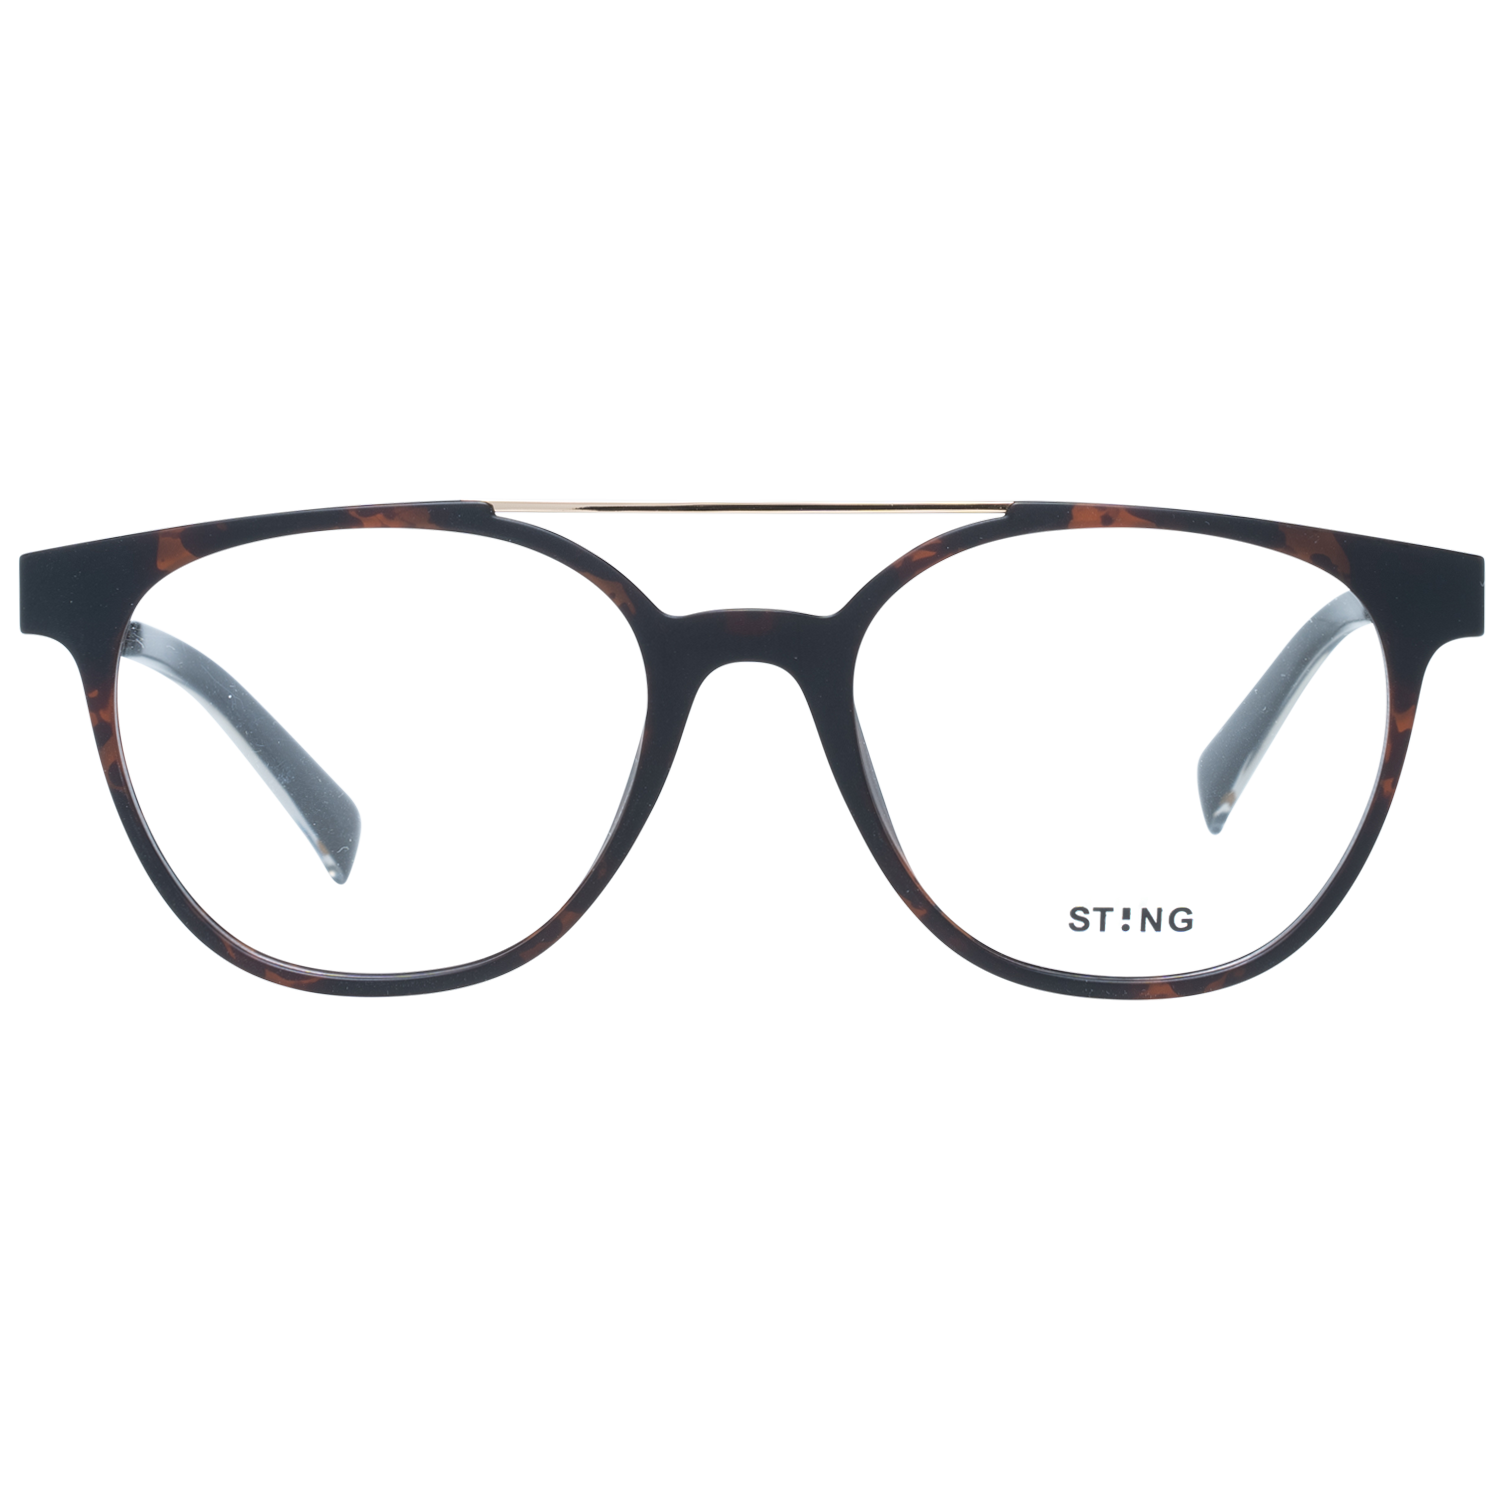 Sting Frames Sting Optical Frame VST312 0738 52 Eyeglasses Eyewear UK USA Australia 